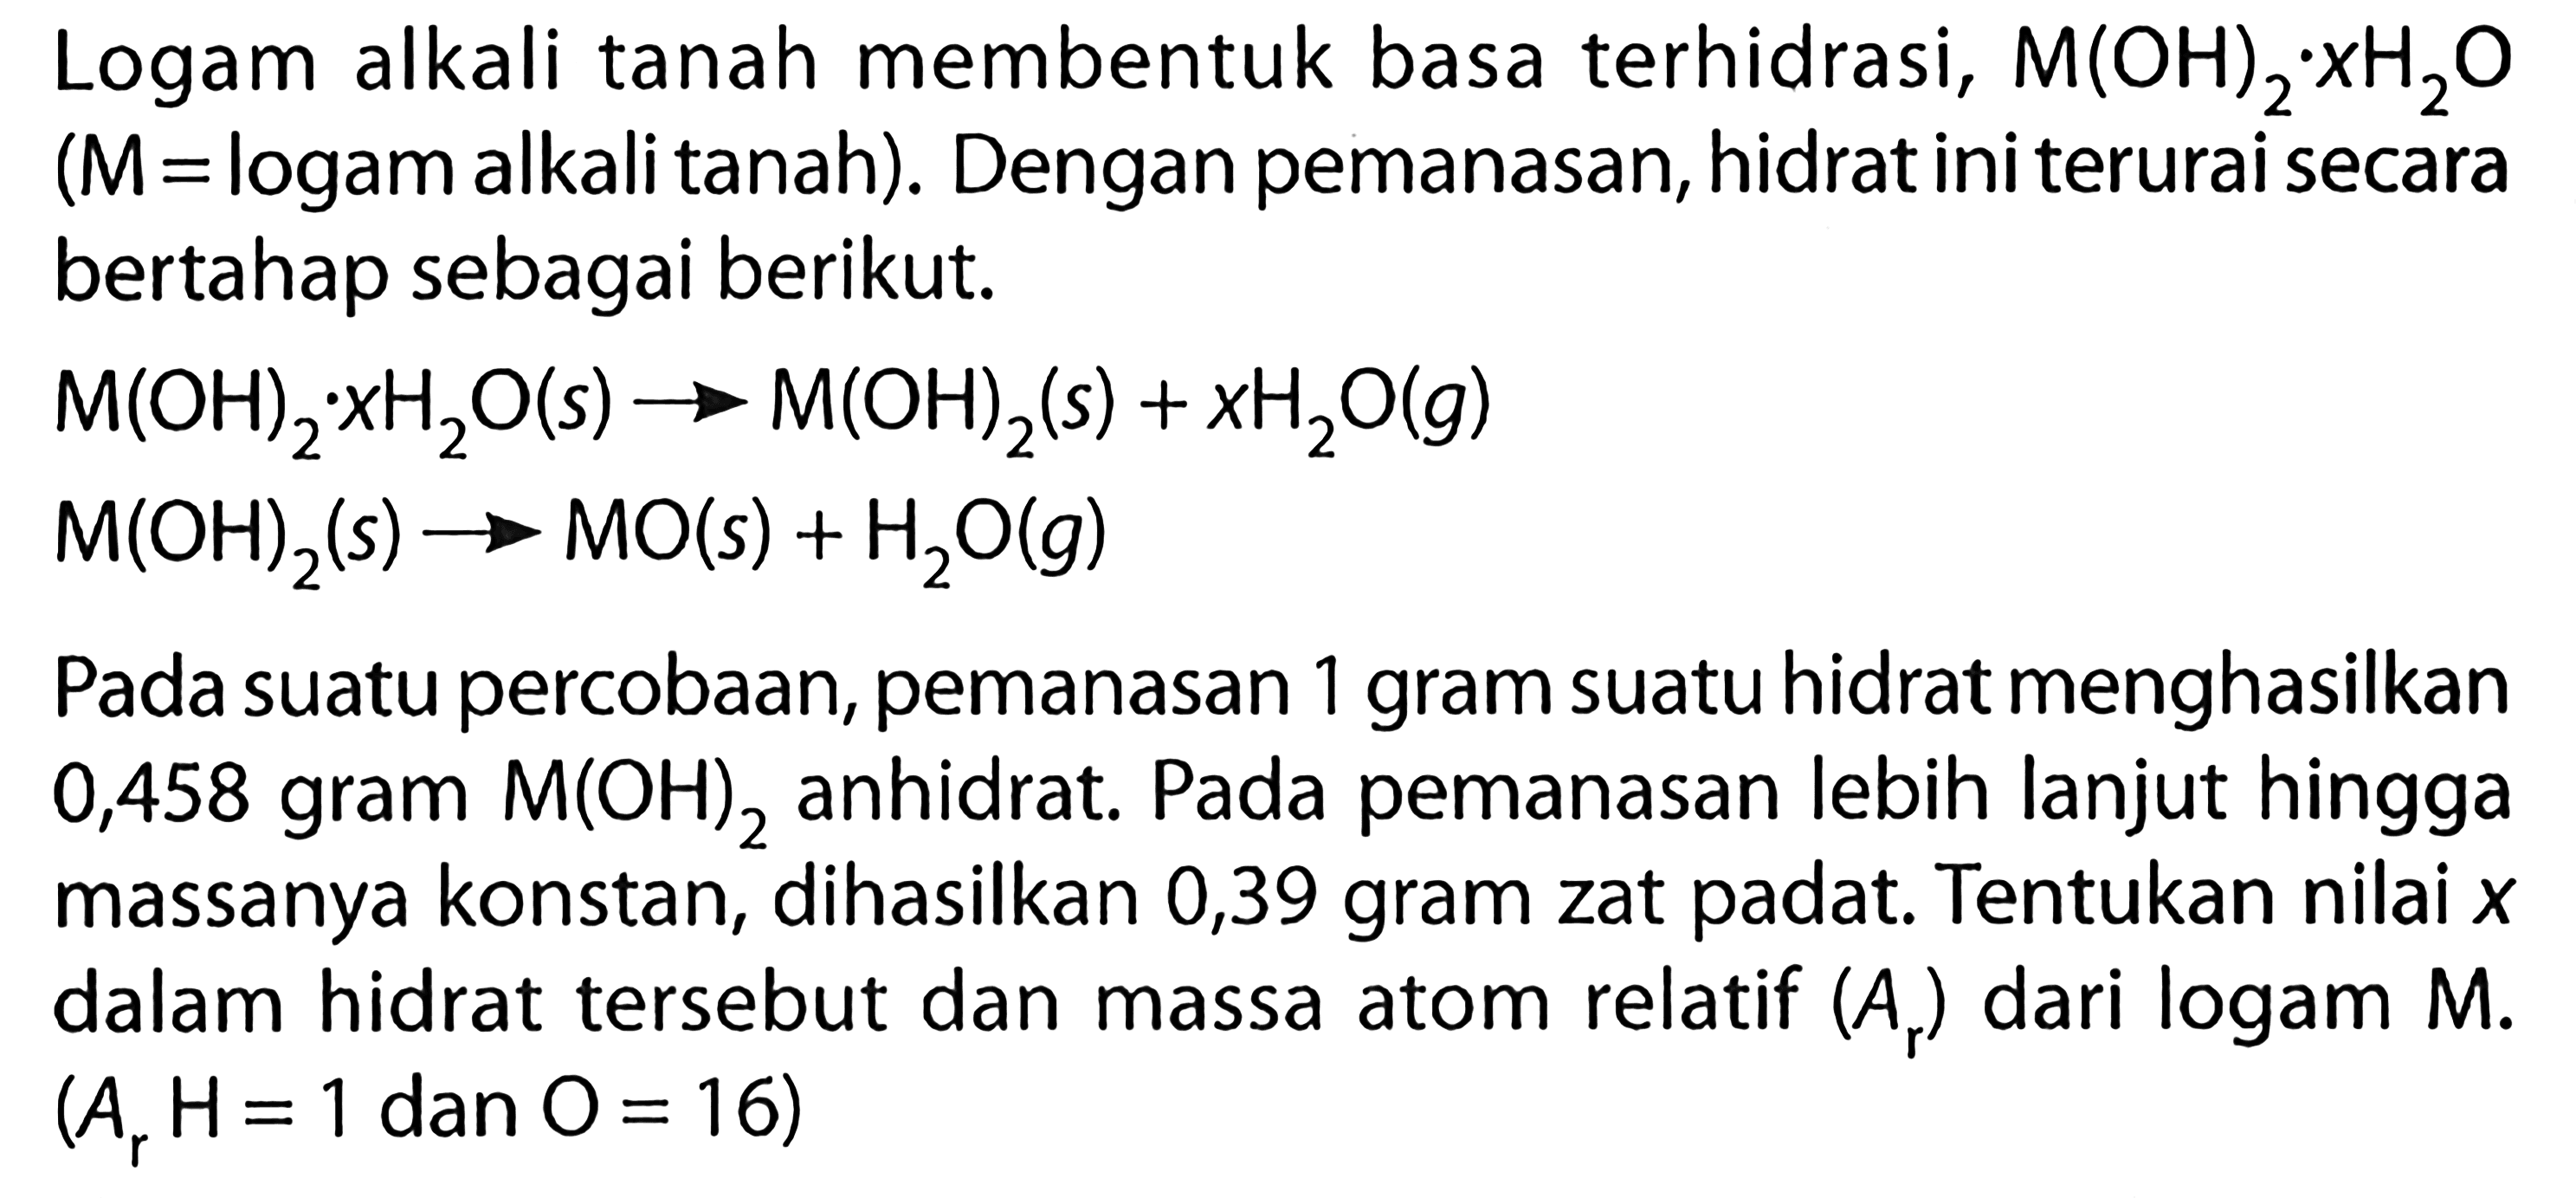 Logam alkali tanah membentuk basa terhidrasi,  M(OH)2.xH2O (M =logam alkali tanah). Dengan pemanasan, hidrat ini terurai secara bertahap sebagai berikut.

M(OH)2.xH2O (s) -> M(OH)2 (s) + xH2O (g) 
M(OH)2 (s) -> MO (s) + H2O (g)

Pada suatu percobaan, pemanasan 1 gram suatu hidrat menghasilkan 0,458 gram M(OH)2 anhidrat. Pada pemanasan lebih lanjut hingga massanya konstan, dihasilkan 0,39 gram zat padat. Tentukan nilai  x  dalam hidrat tersebut dan massa atom relatif (Ar) dari logam M.
(Ar H=1 dan O=16)
